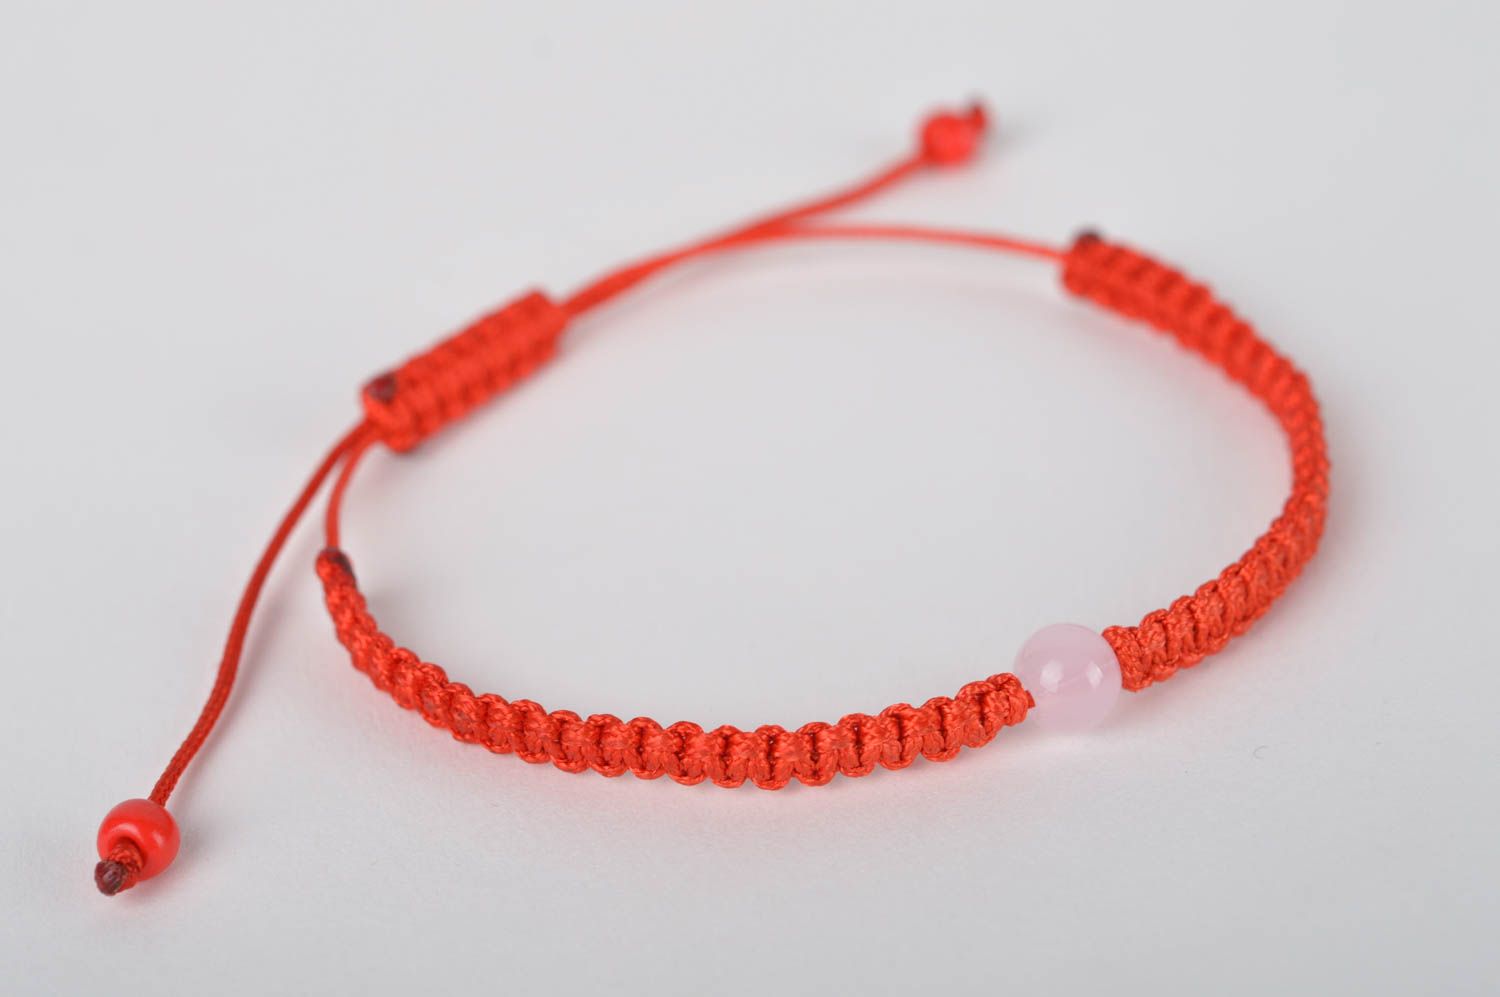 Unusual handmade wrist bracelet woven thread bracelet textile jewelry designs photo 2